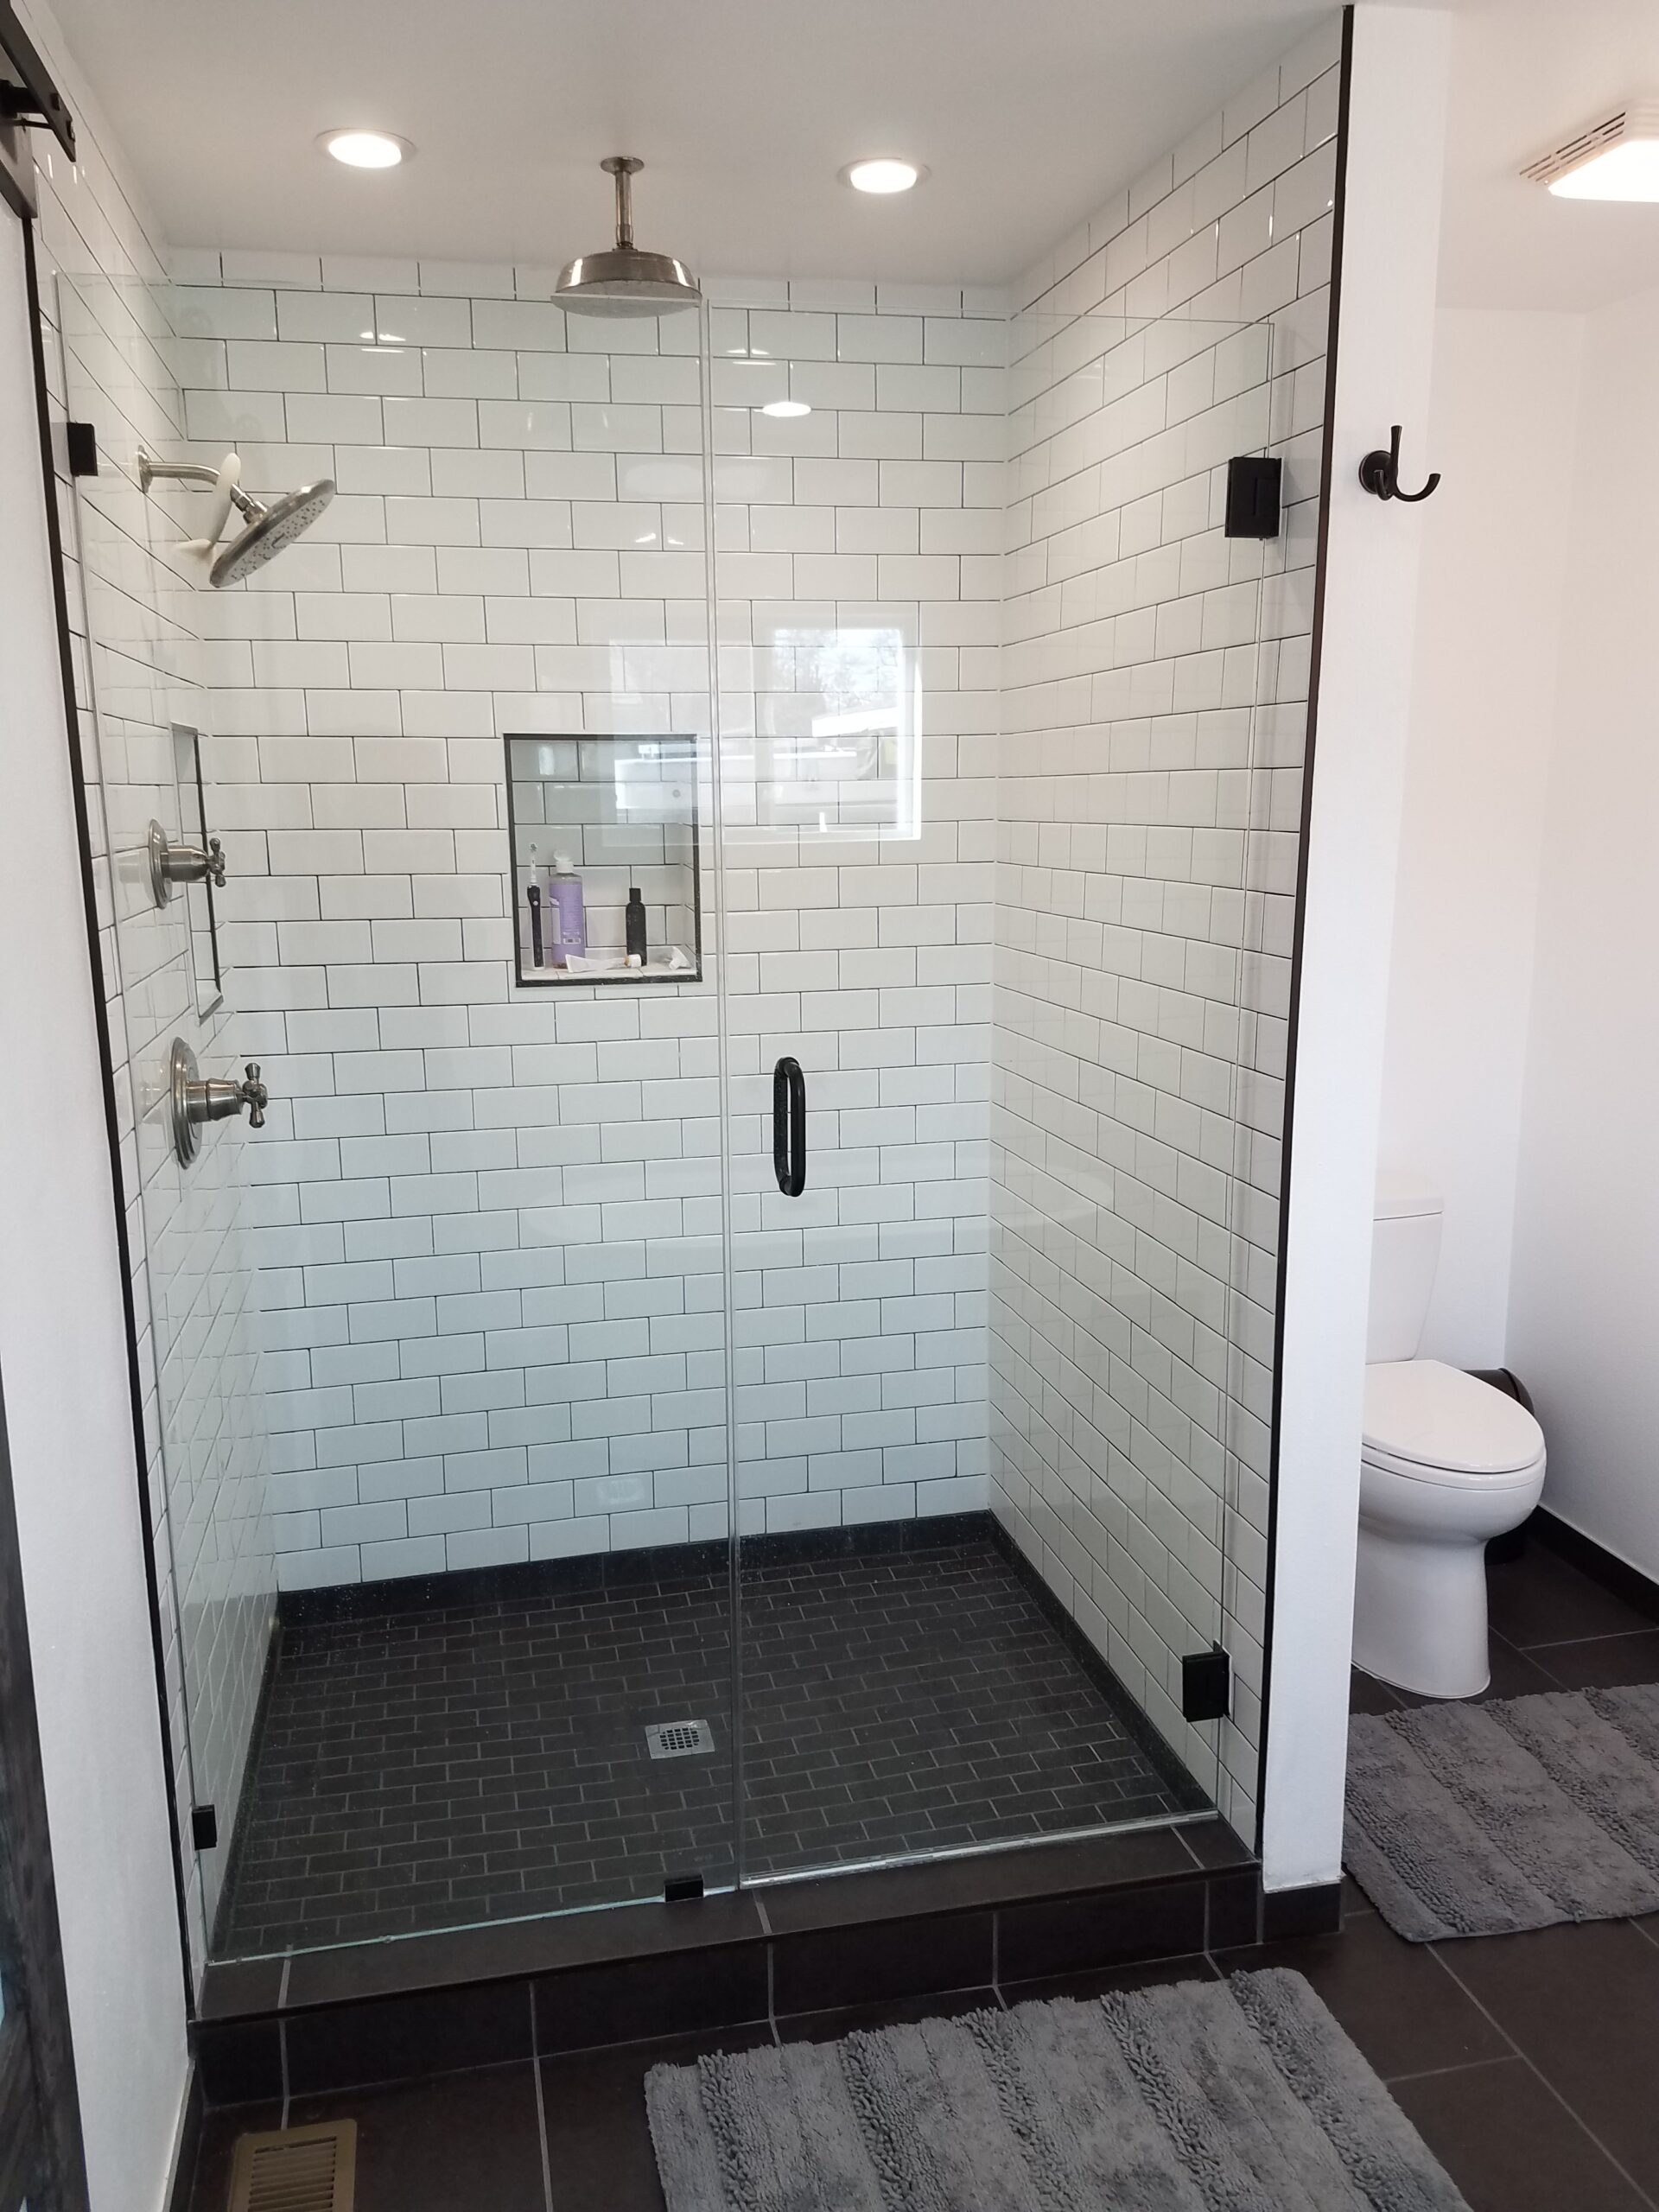 image showing bathroom remodel